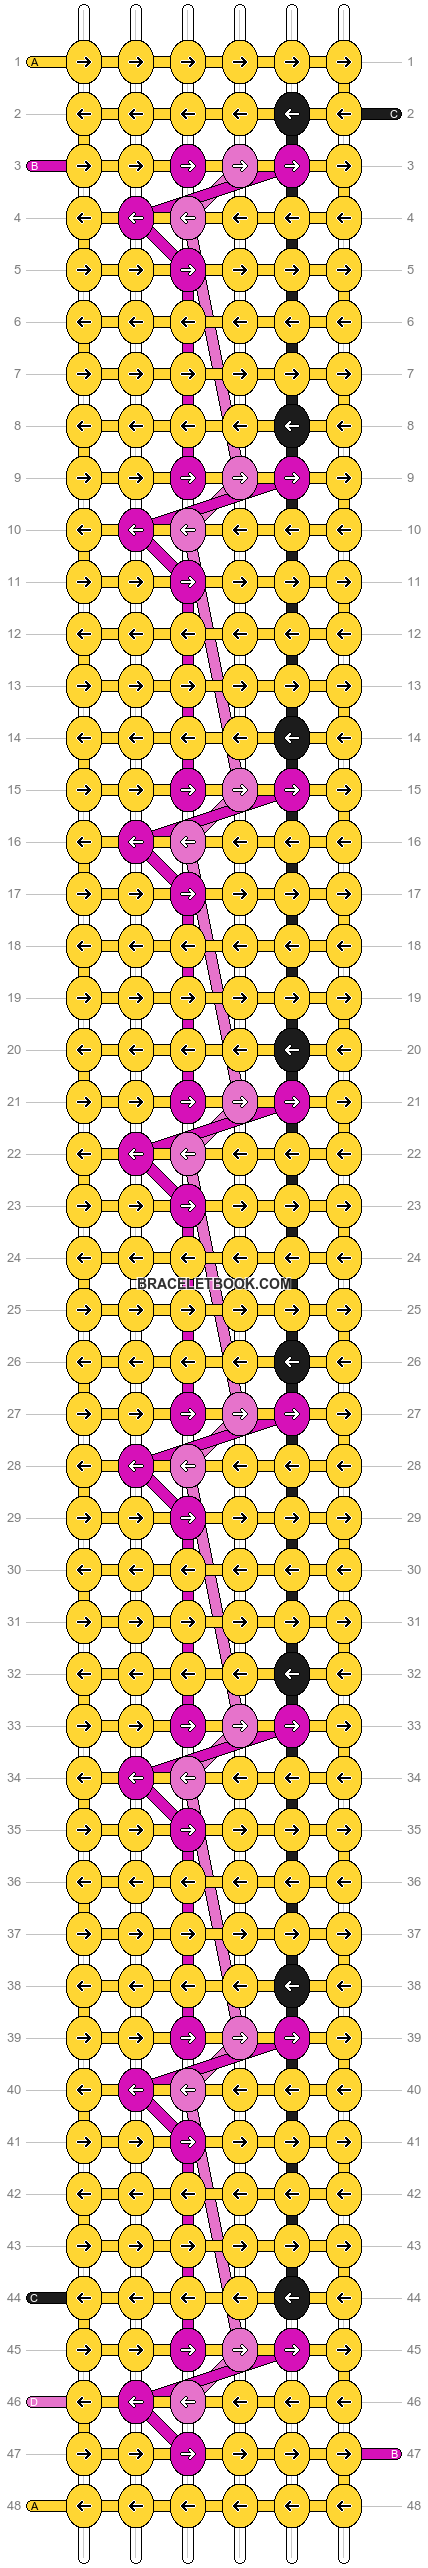 Alpha pattern #54764 variation #95363 pattern